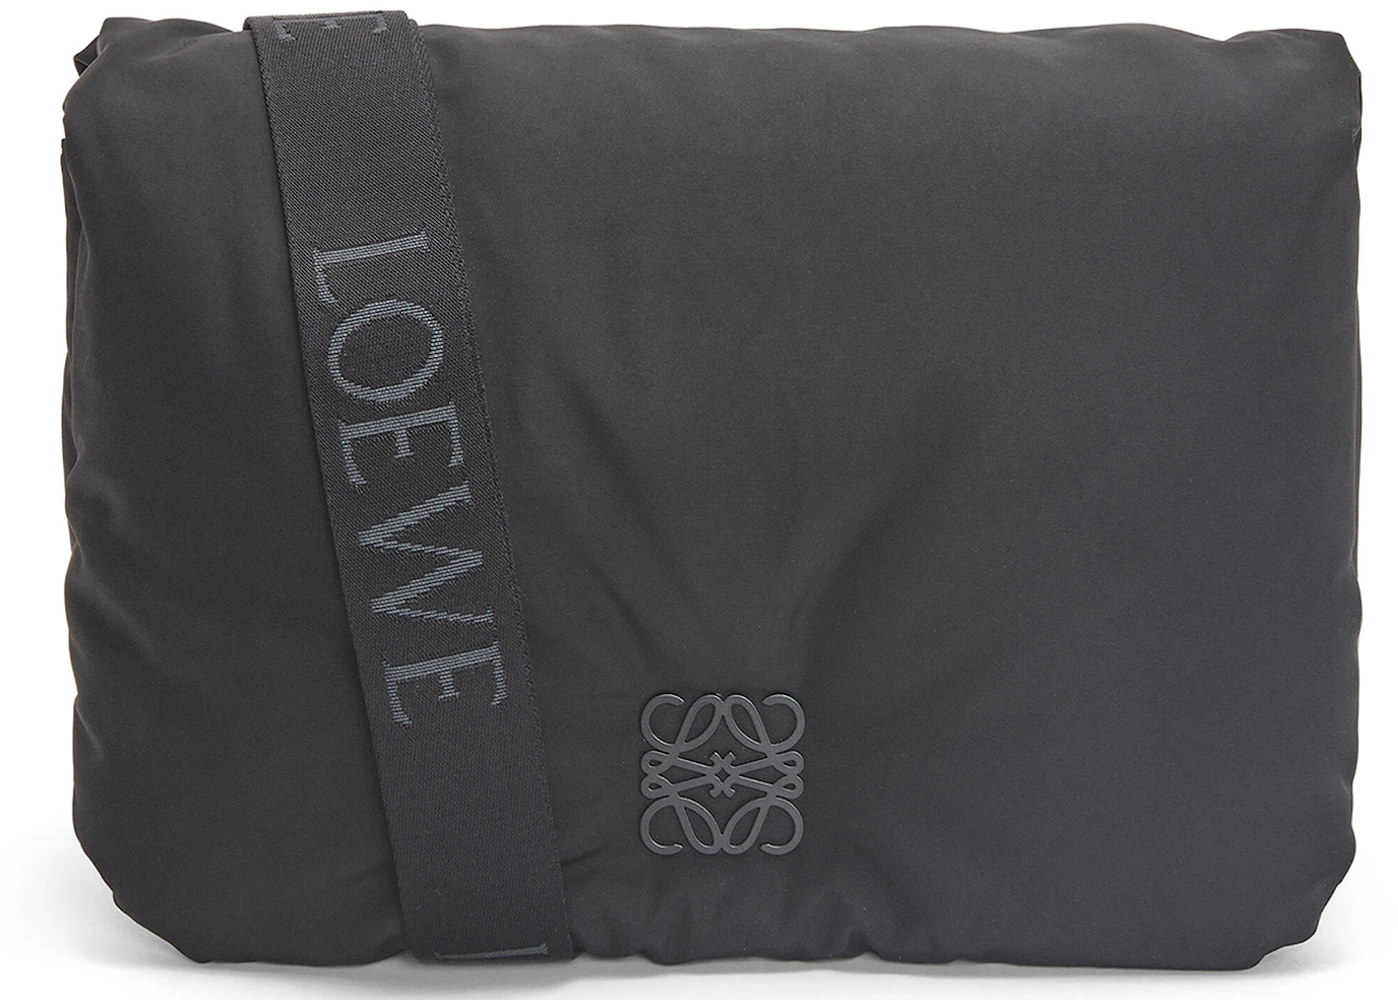 Puffer Goya Leather Pouch in Black - Loewe